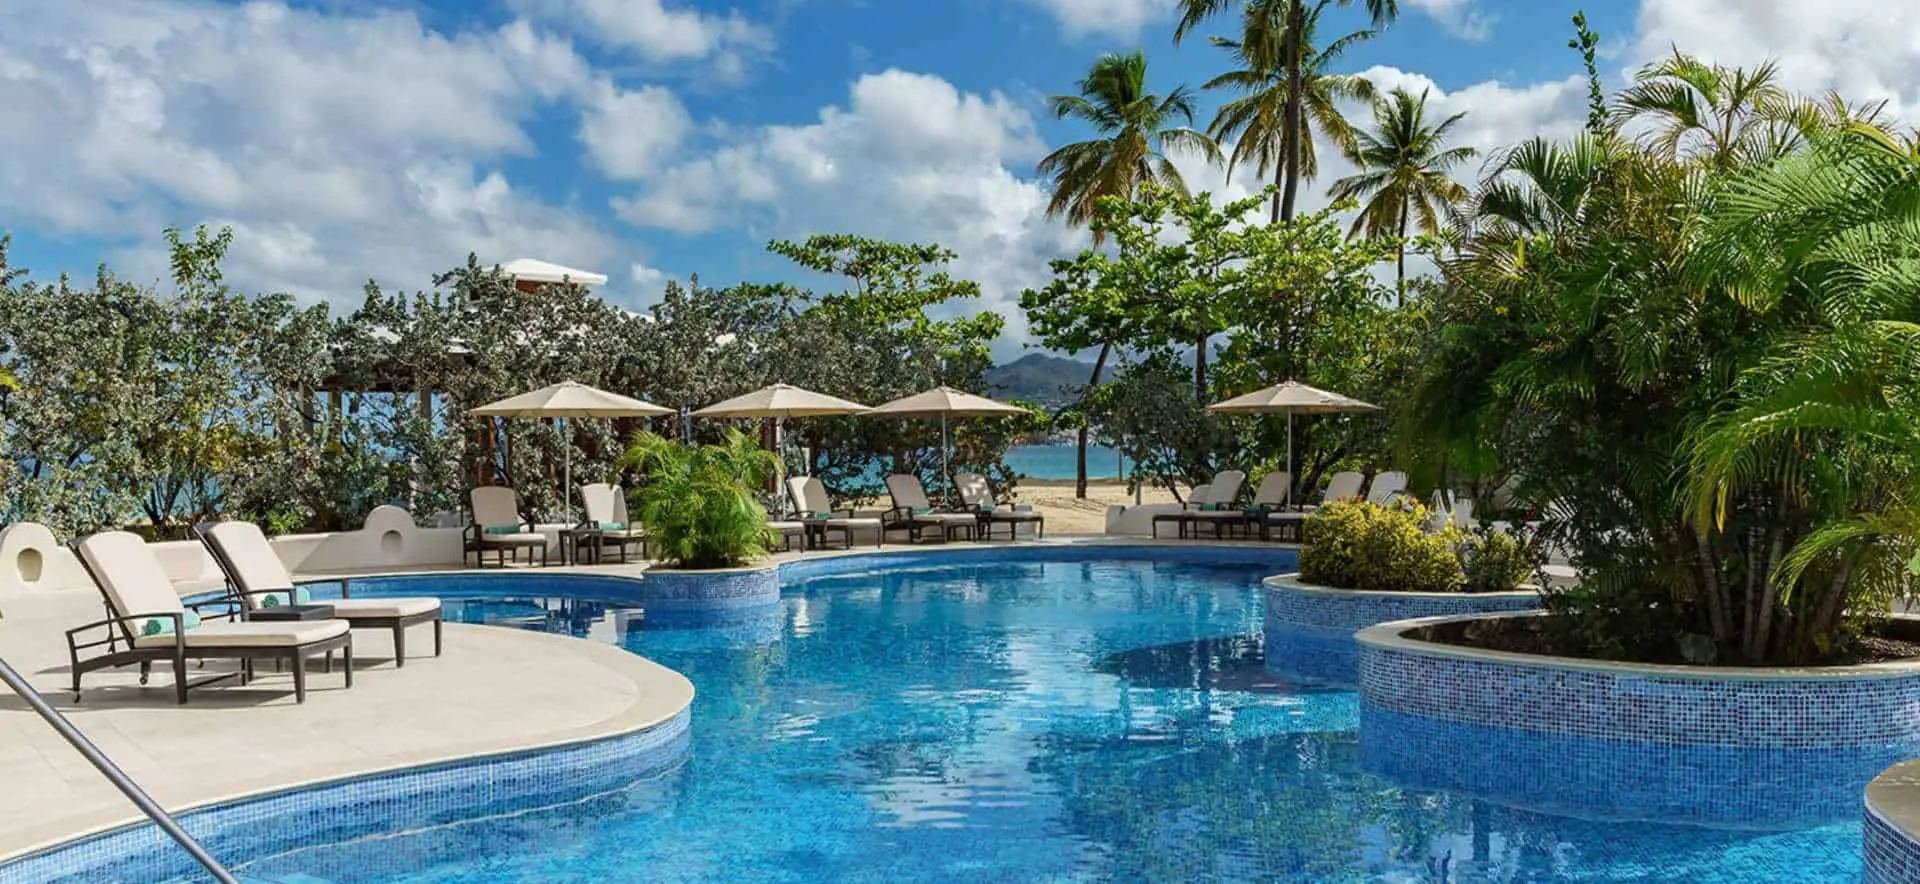 Grenada’s All-Inclusive Hotels (+the Hidden Ones) - Caribbean Authority